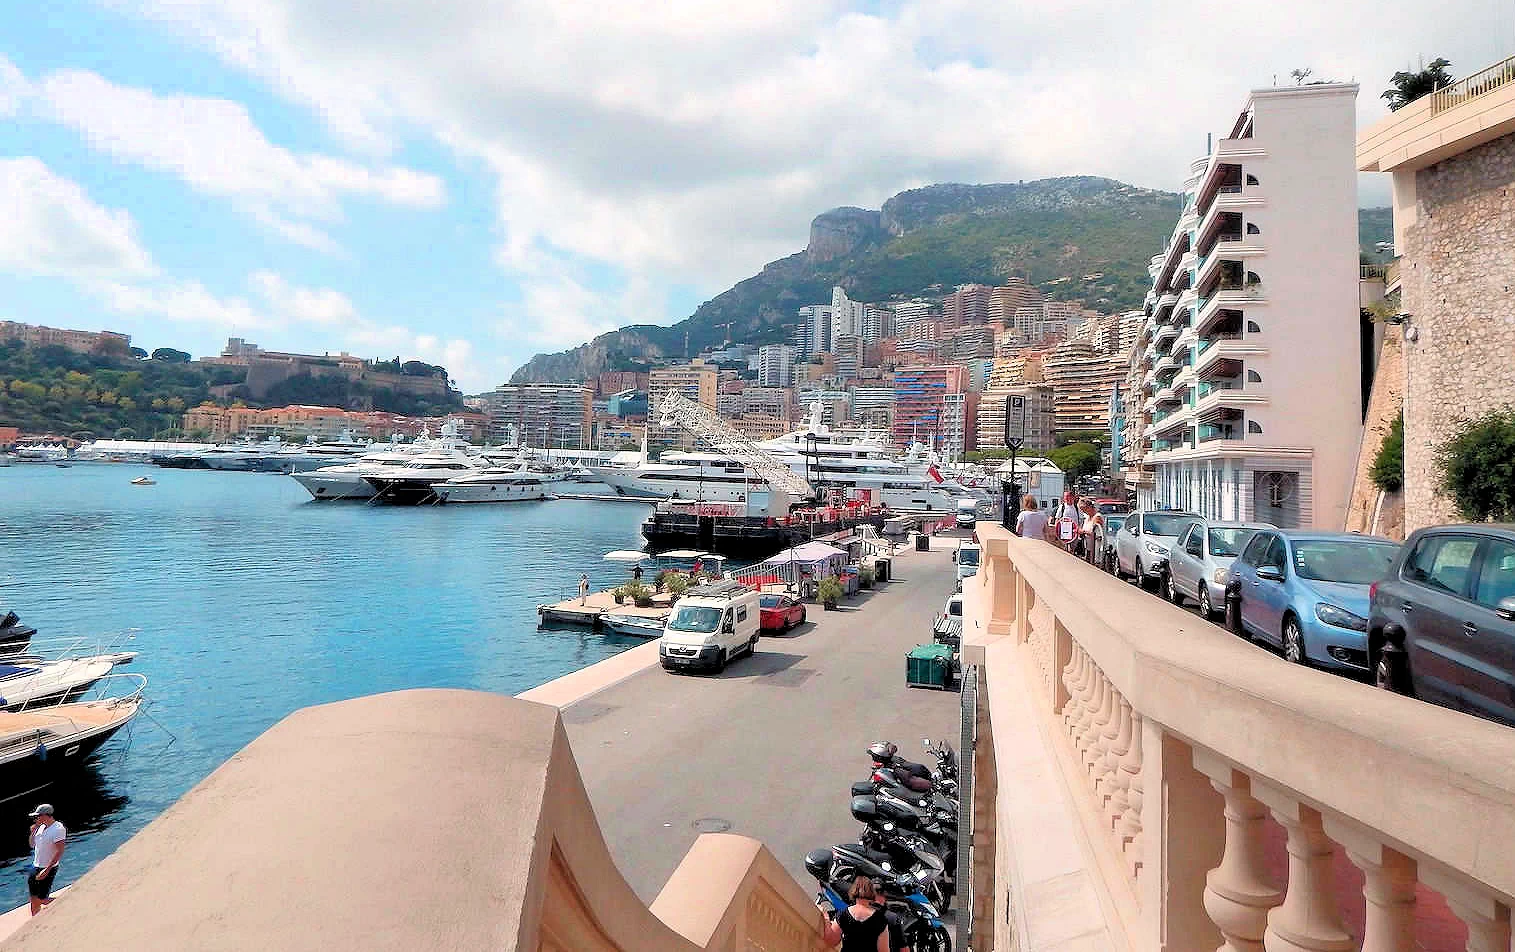 The Principality of Monaco